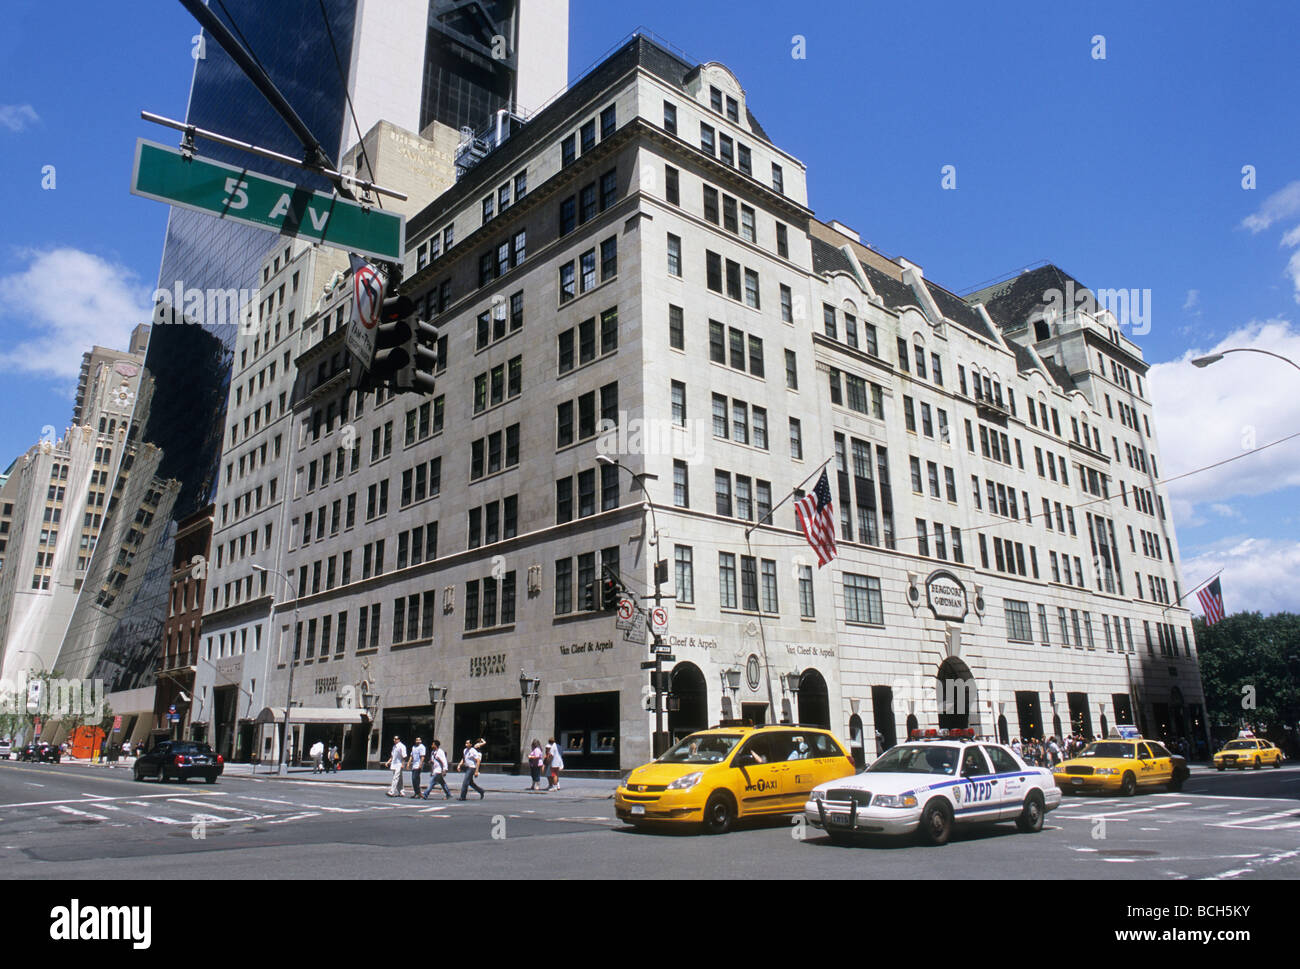 Bergdorf Goodman 754 5th Avenue New York, NY 10022 on 4URSPACE